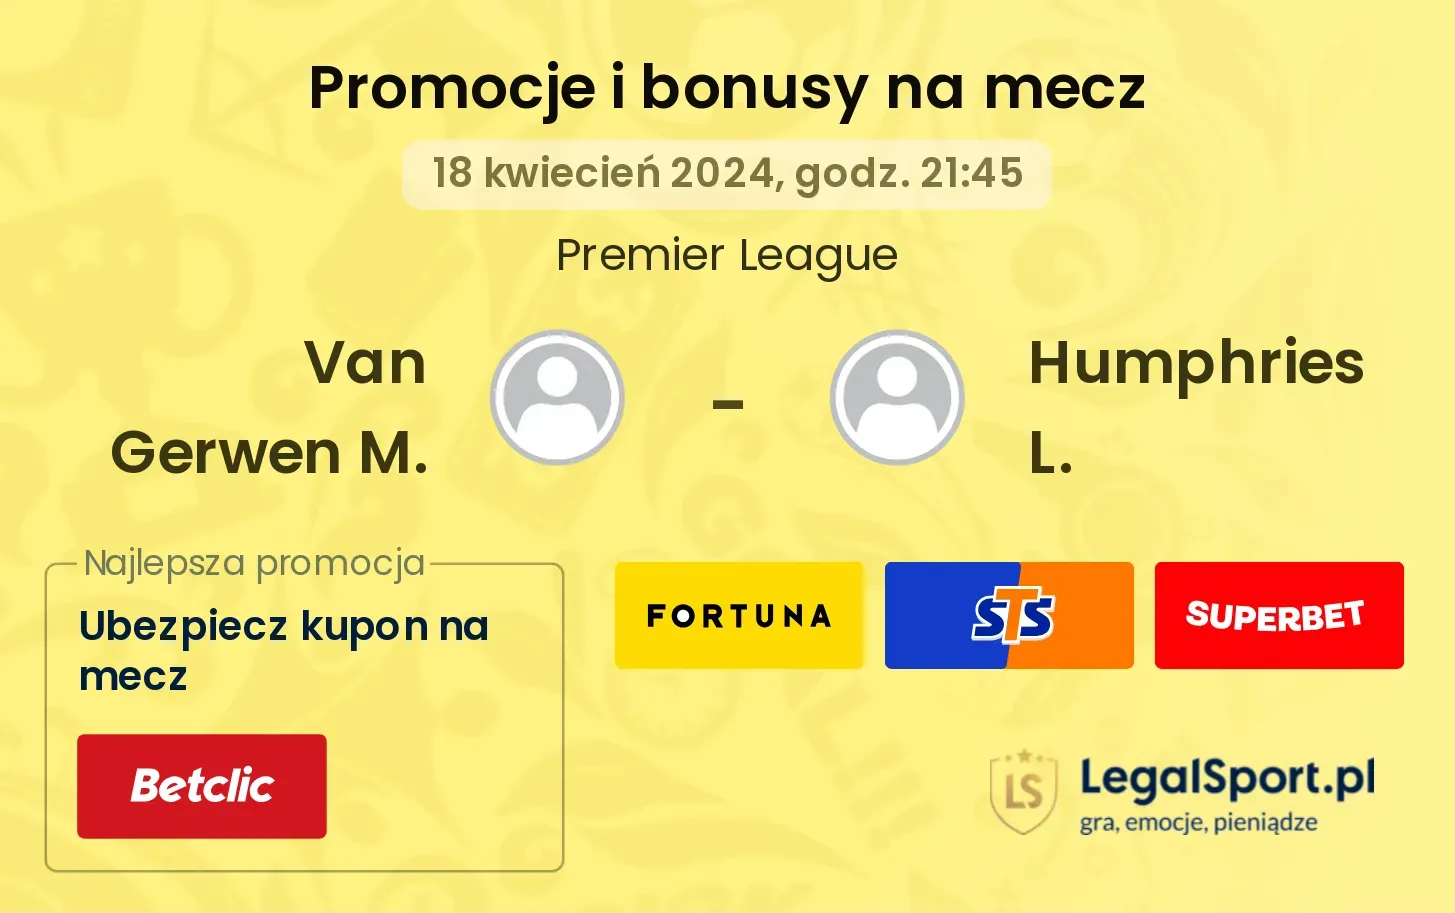 Van Gerwen M. - Humphries L. promocje bonusy na mecz